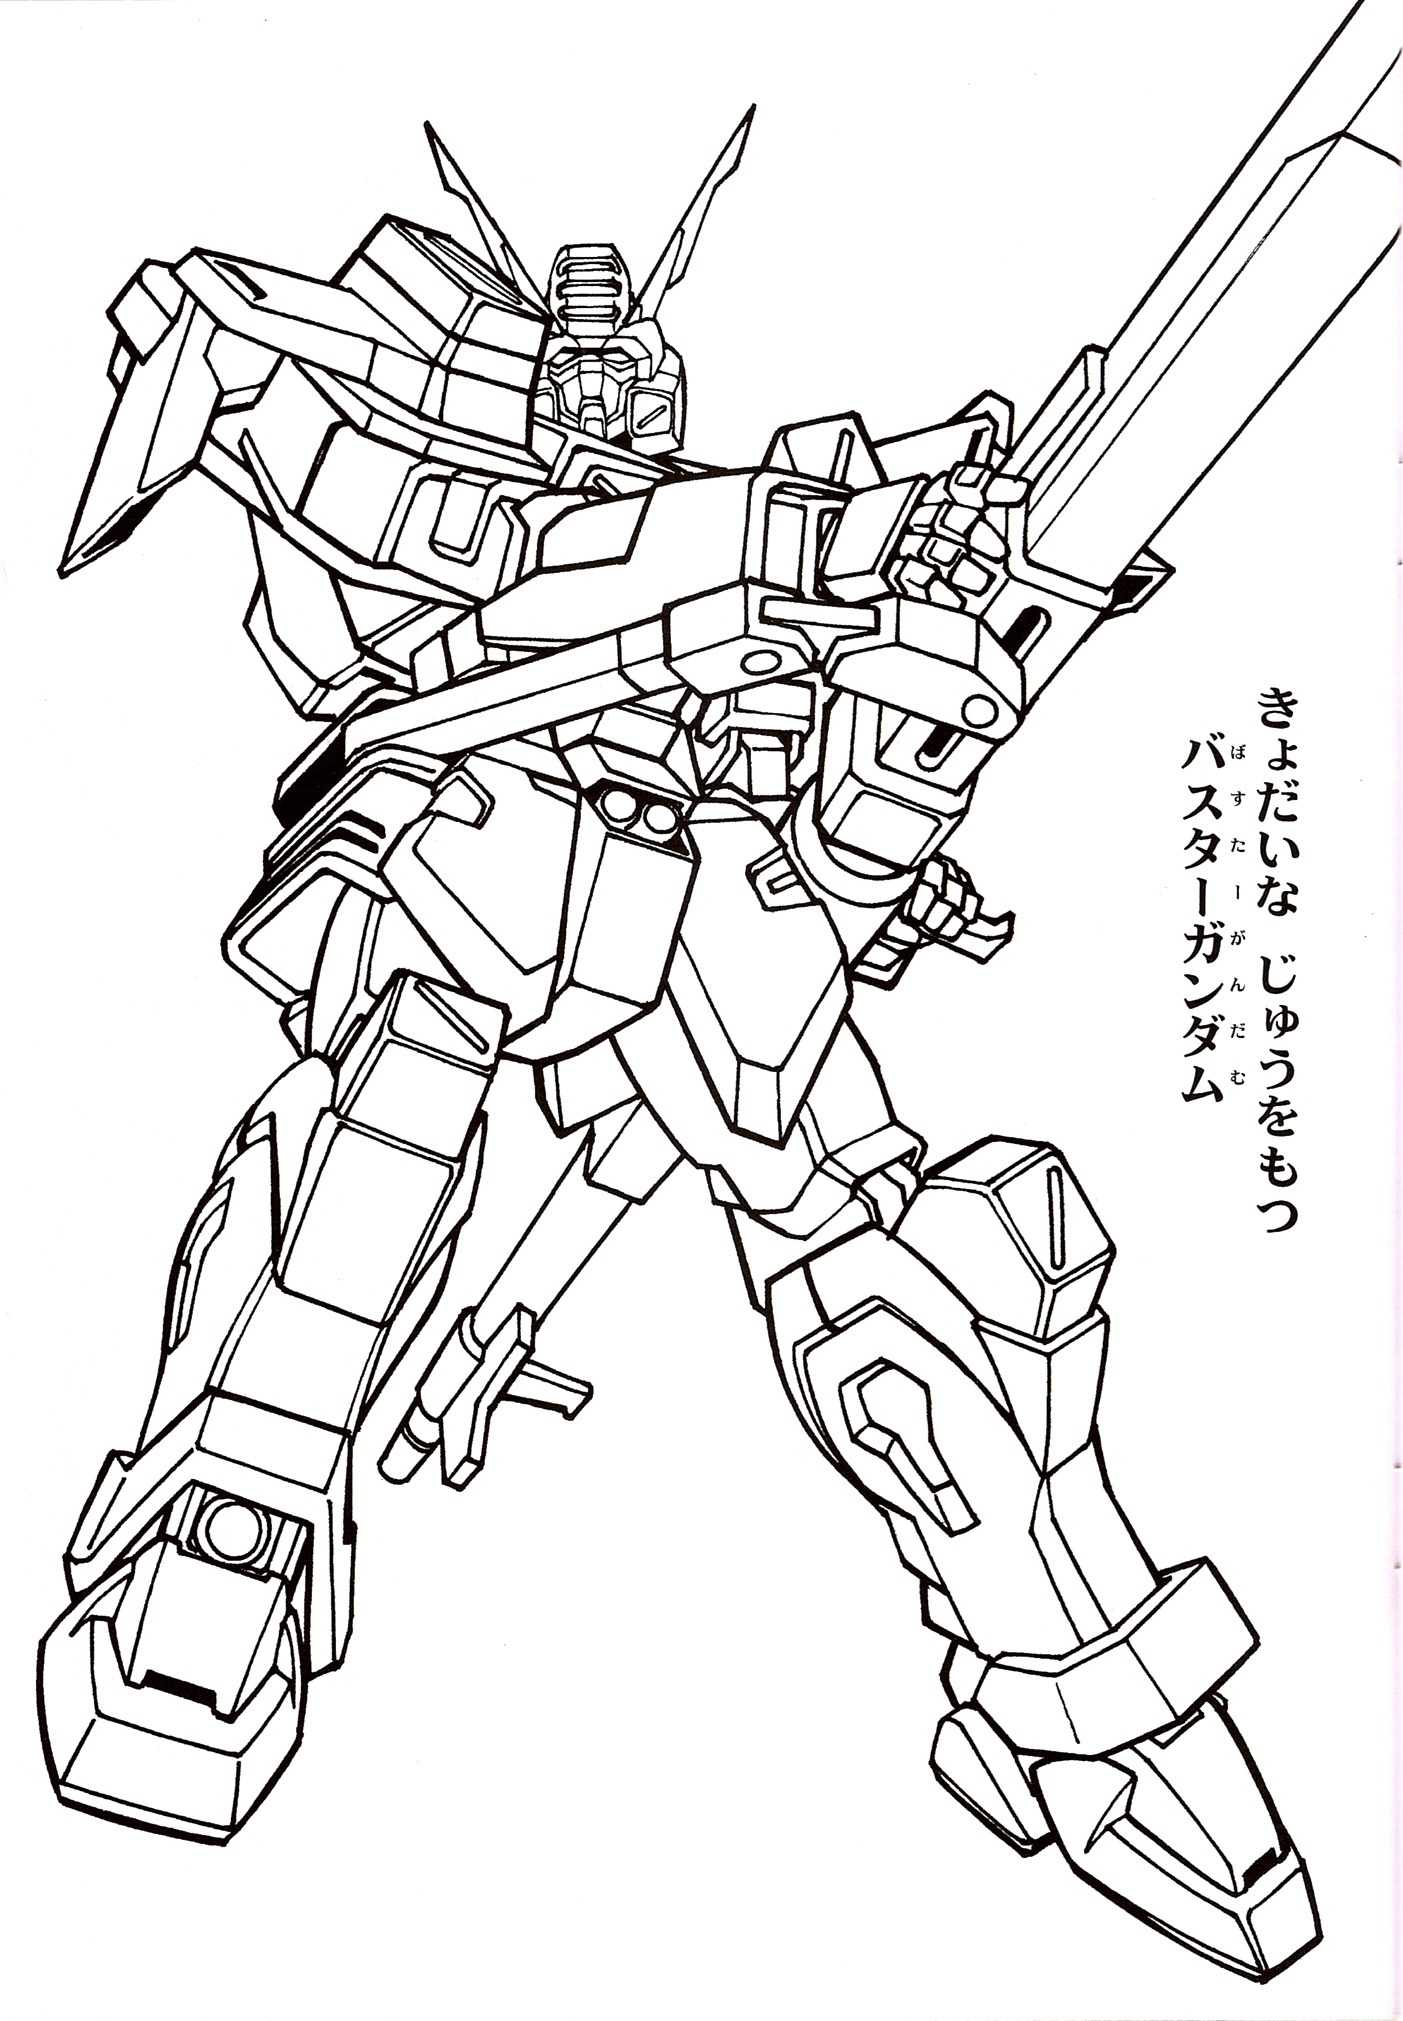 Gundam Japanese Anime Coloring Page - Free Printable Coloring ...